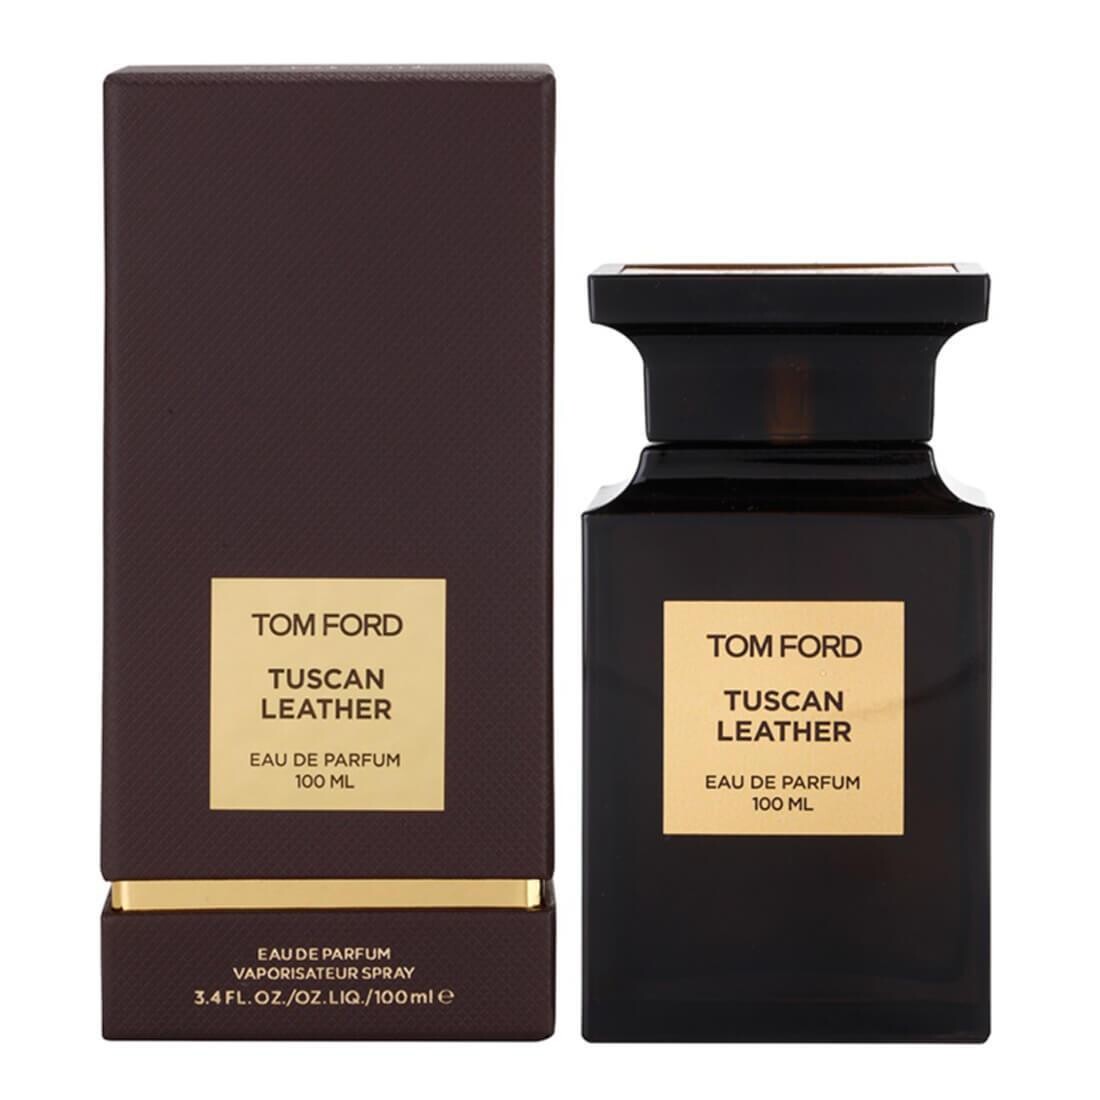 Tom Ford Tuscan Leather Eau De Perfume 100ml